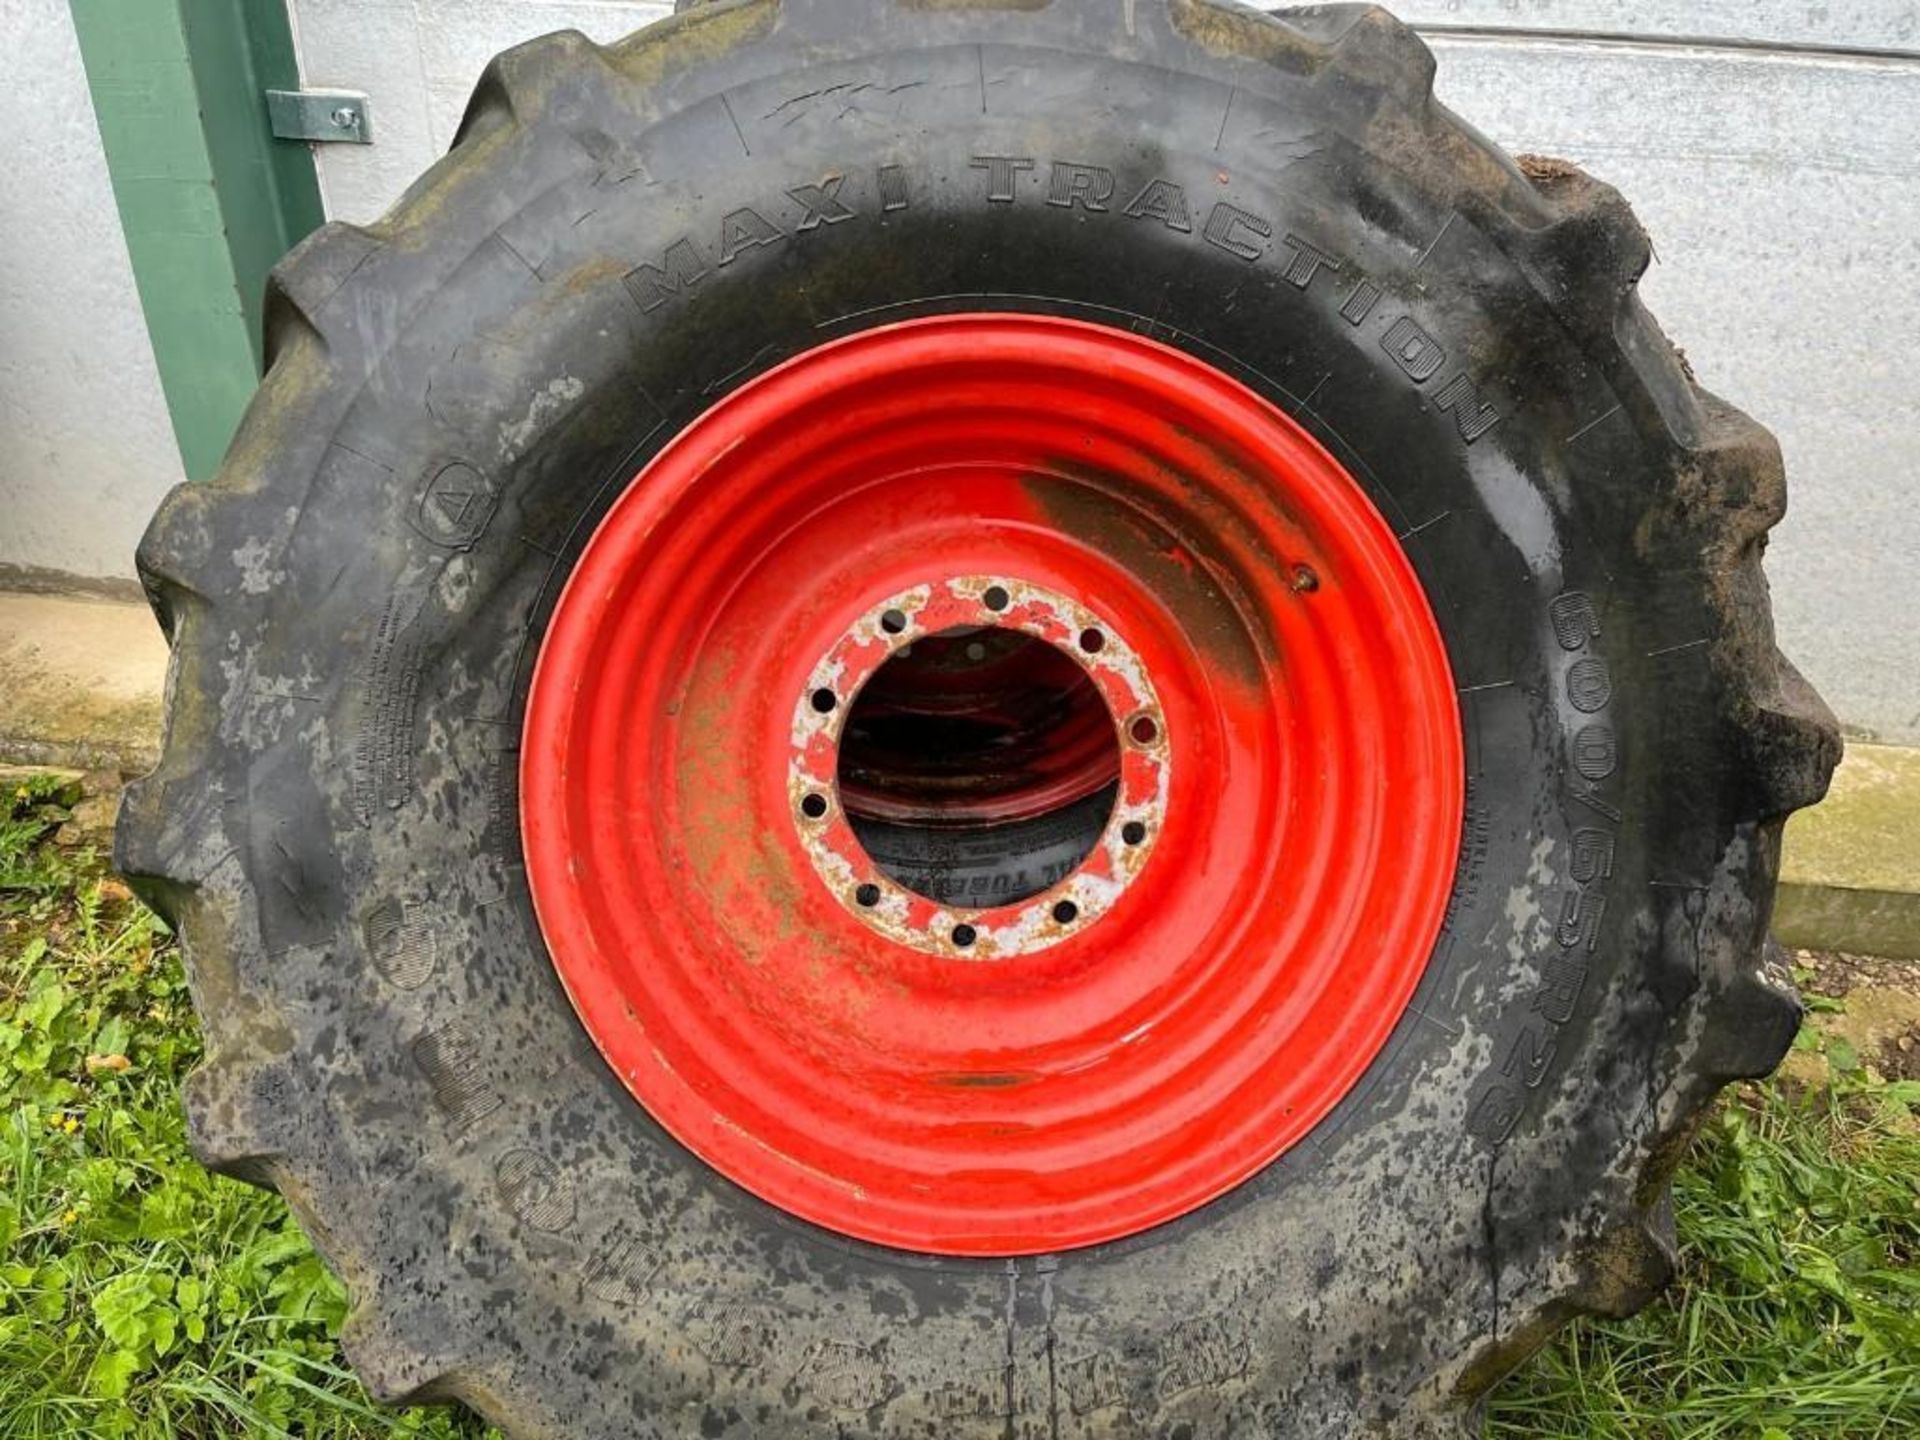 1 x 600/65R28 10 stud rim wheel with Firestone tyre - Image 2 of 3